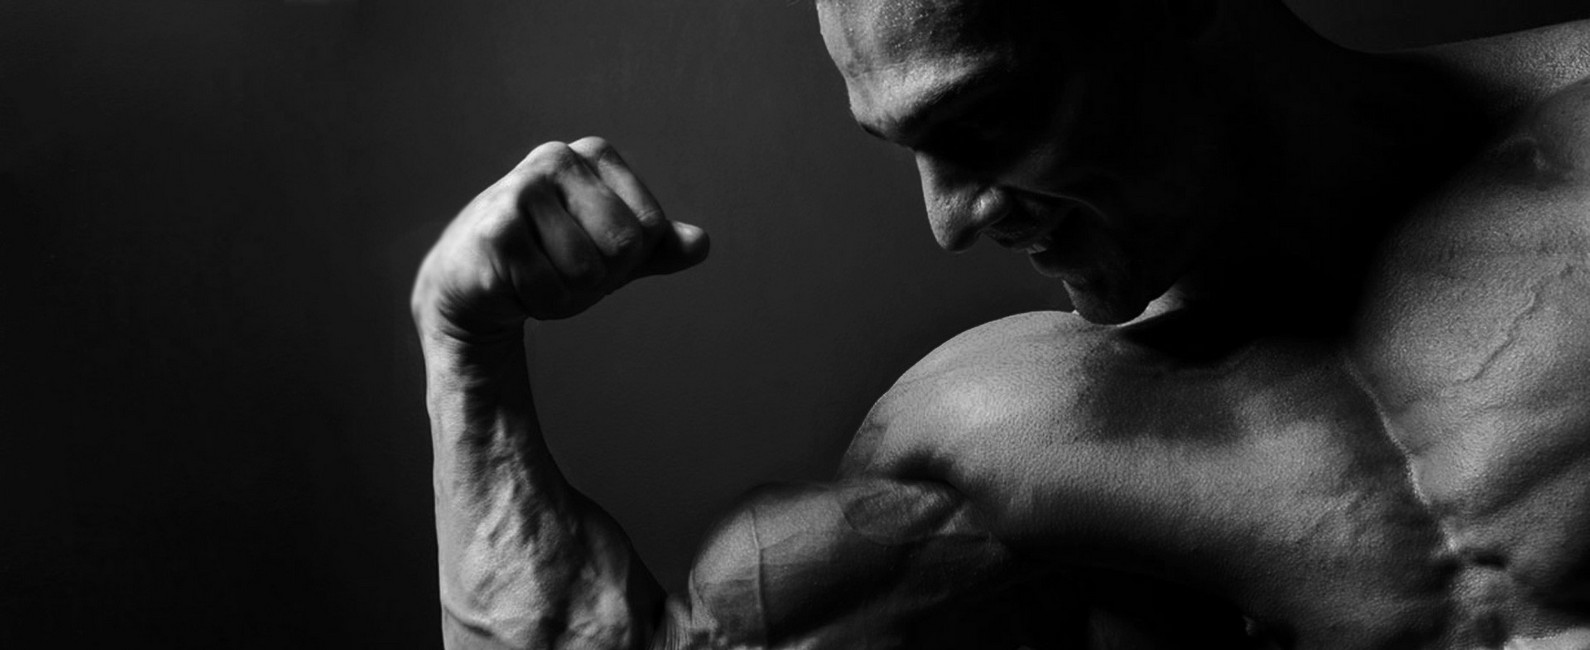 Anadrol uses in bodybuilding